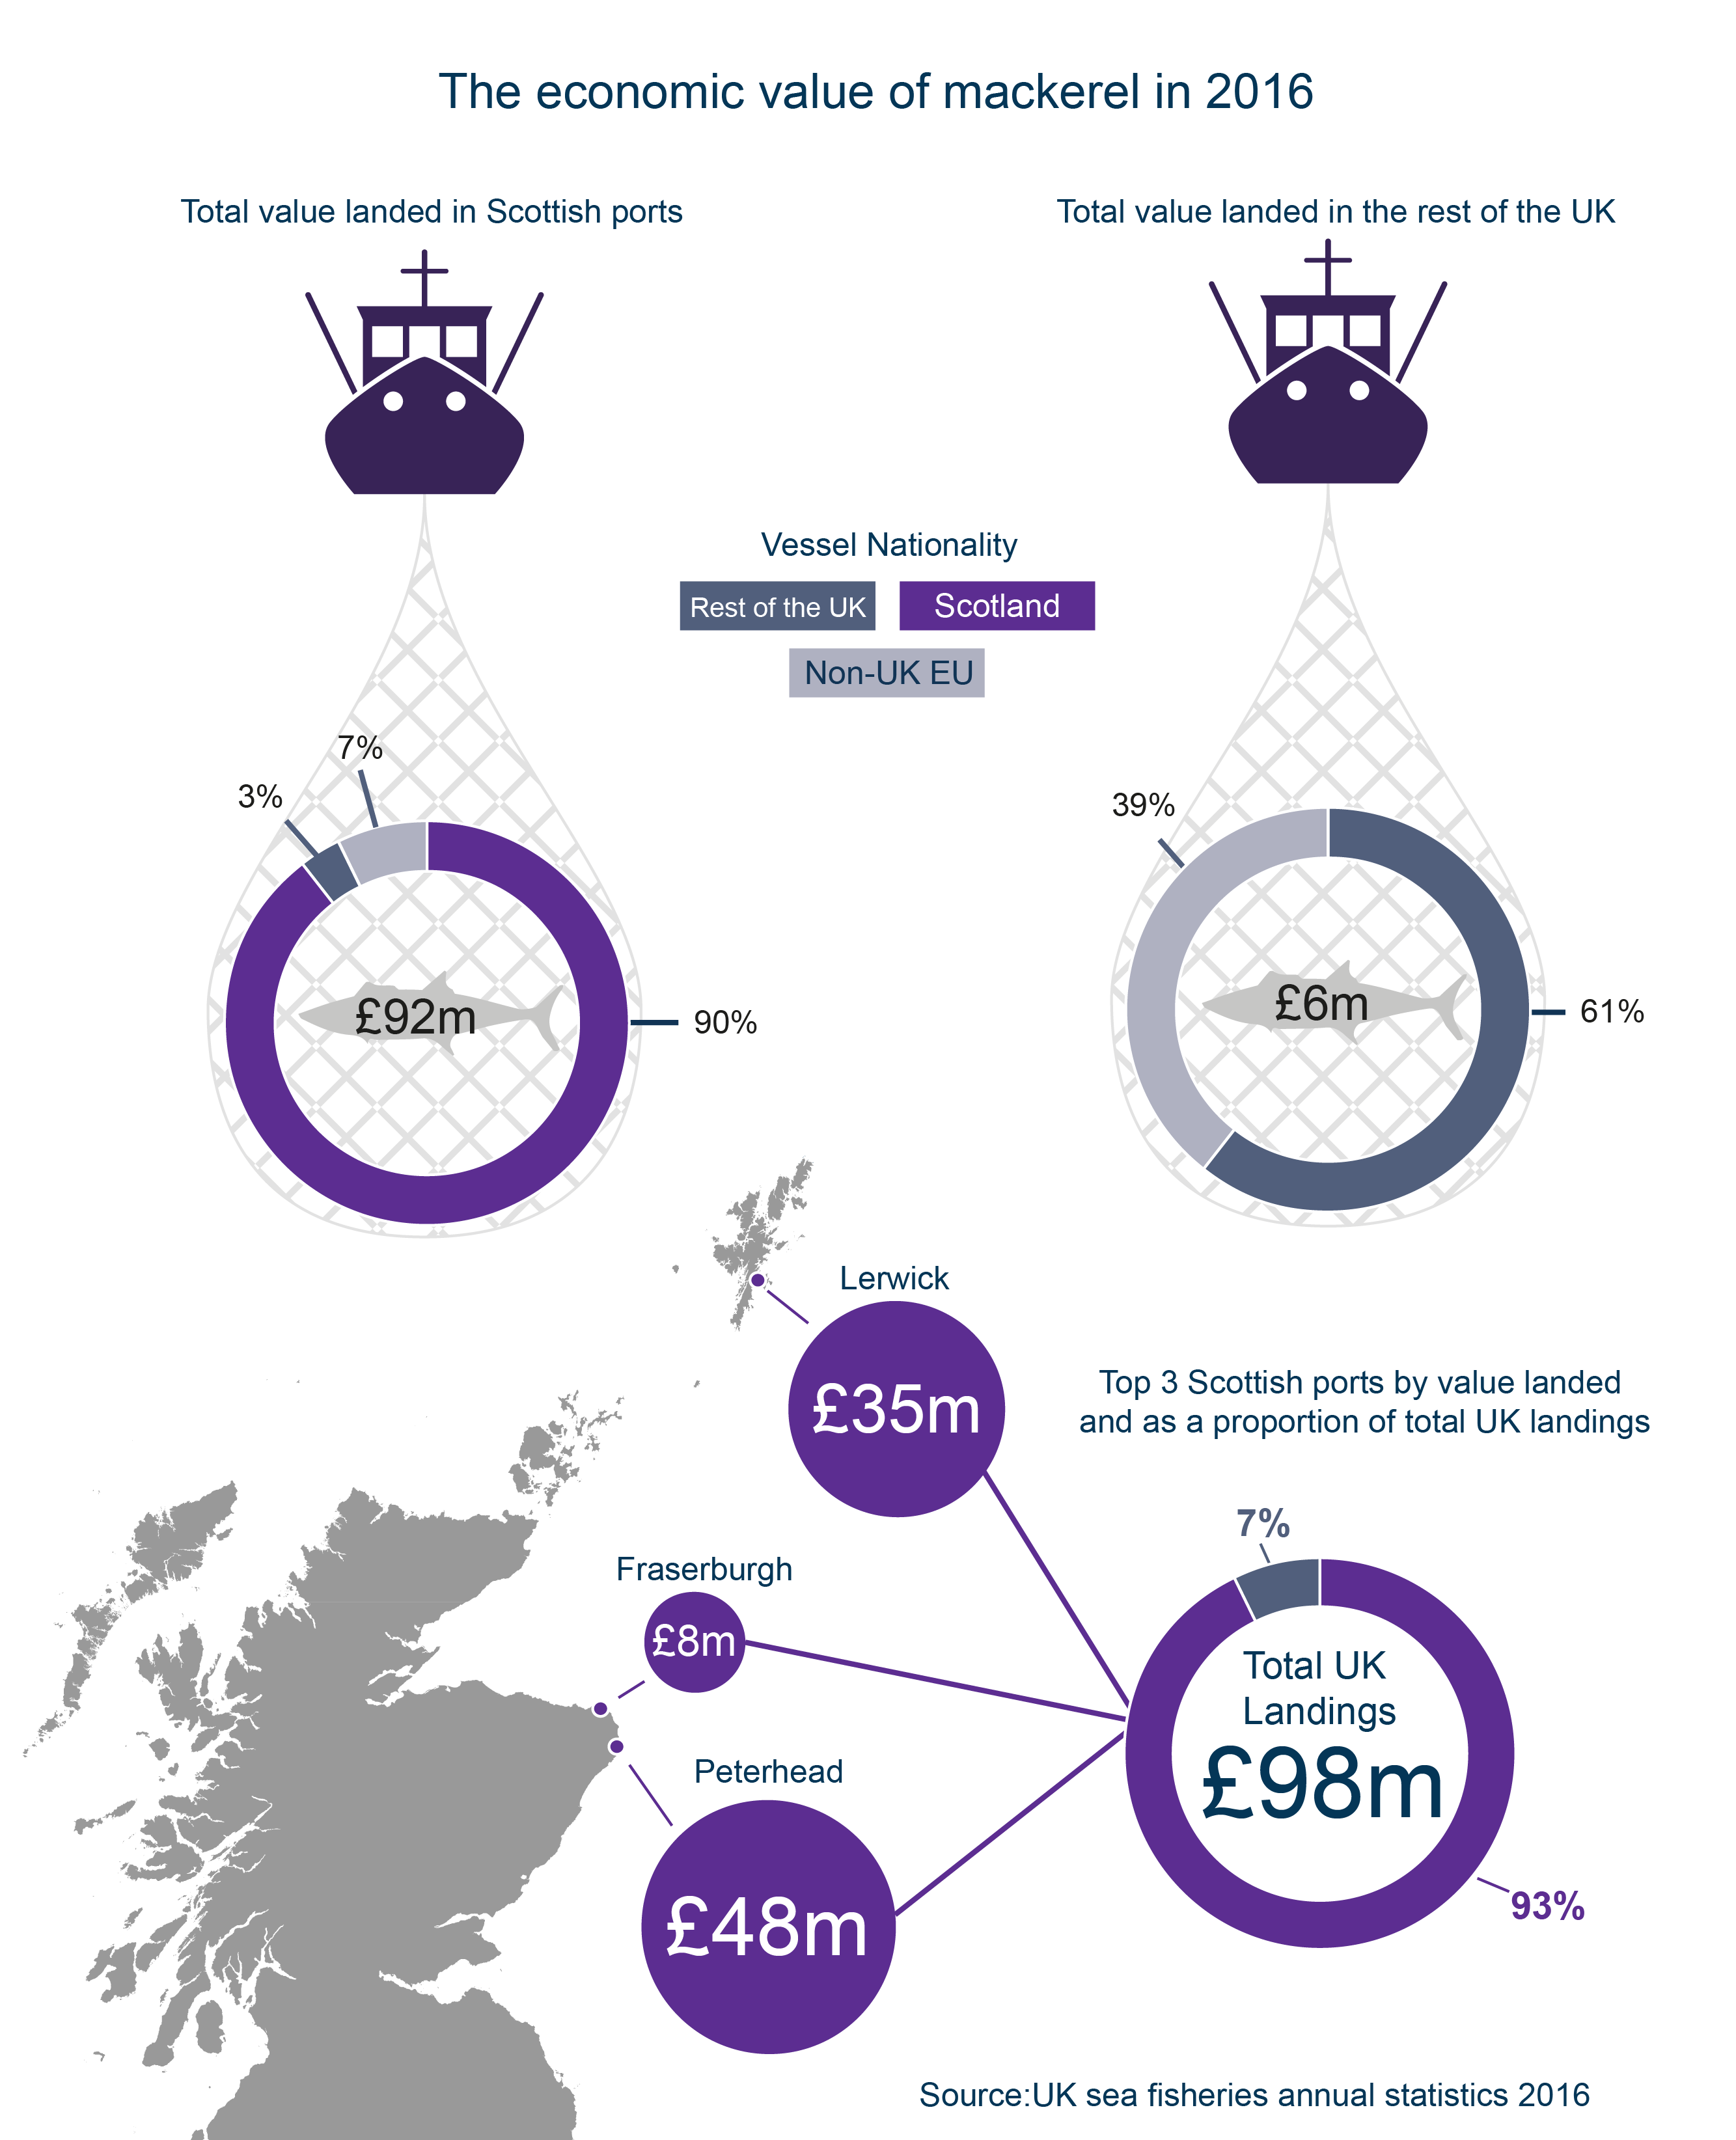 The economic value of mackerel to Scotland